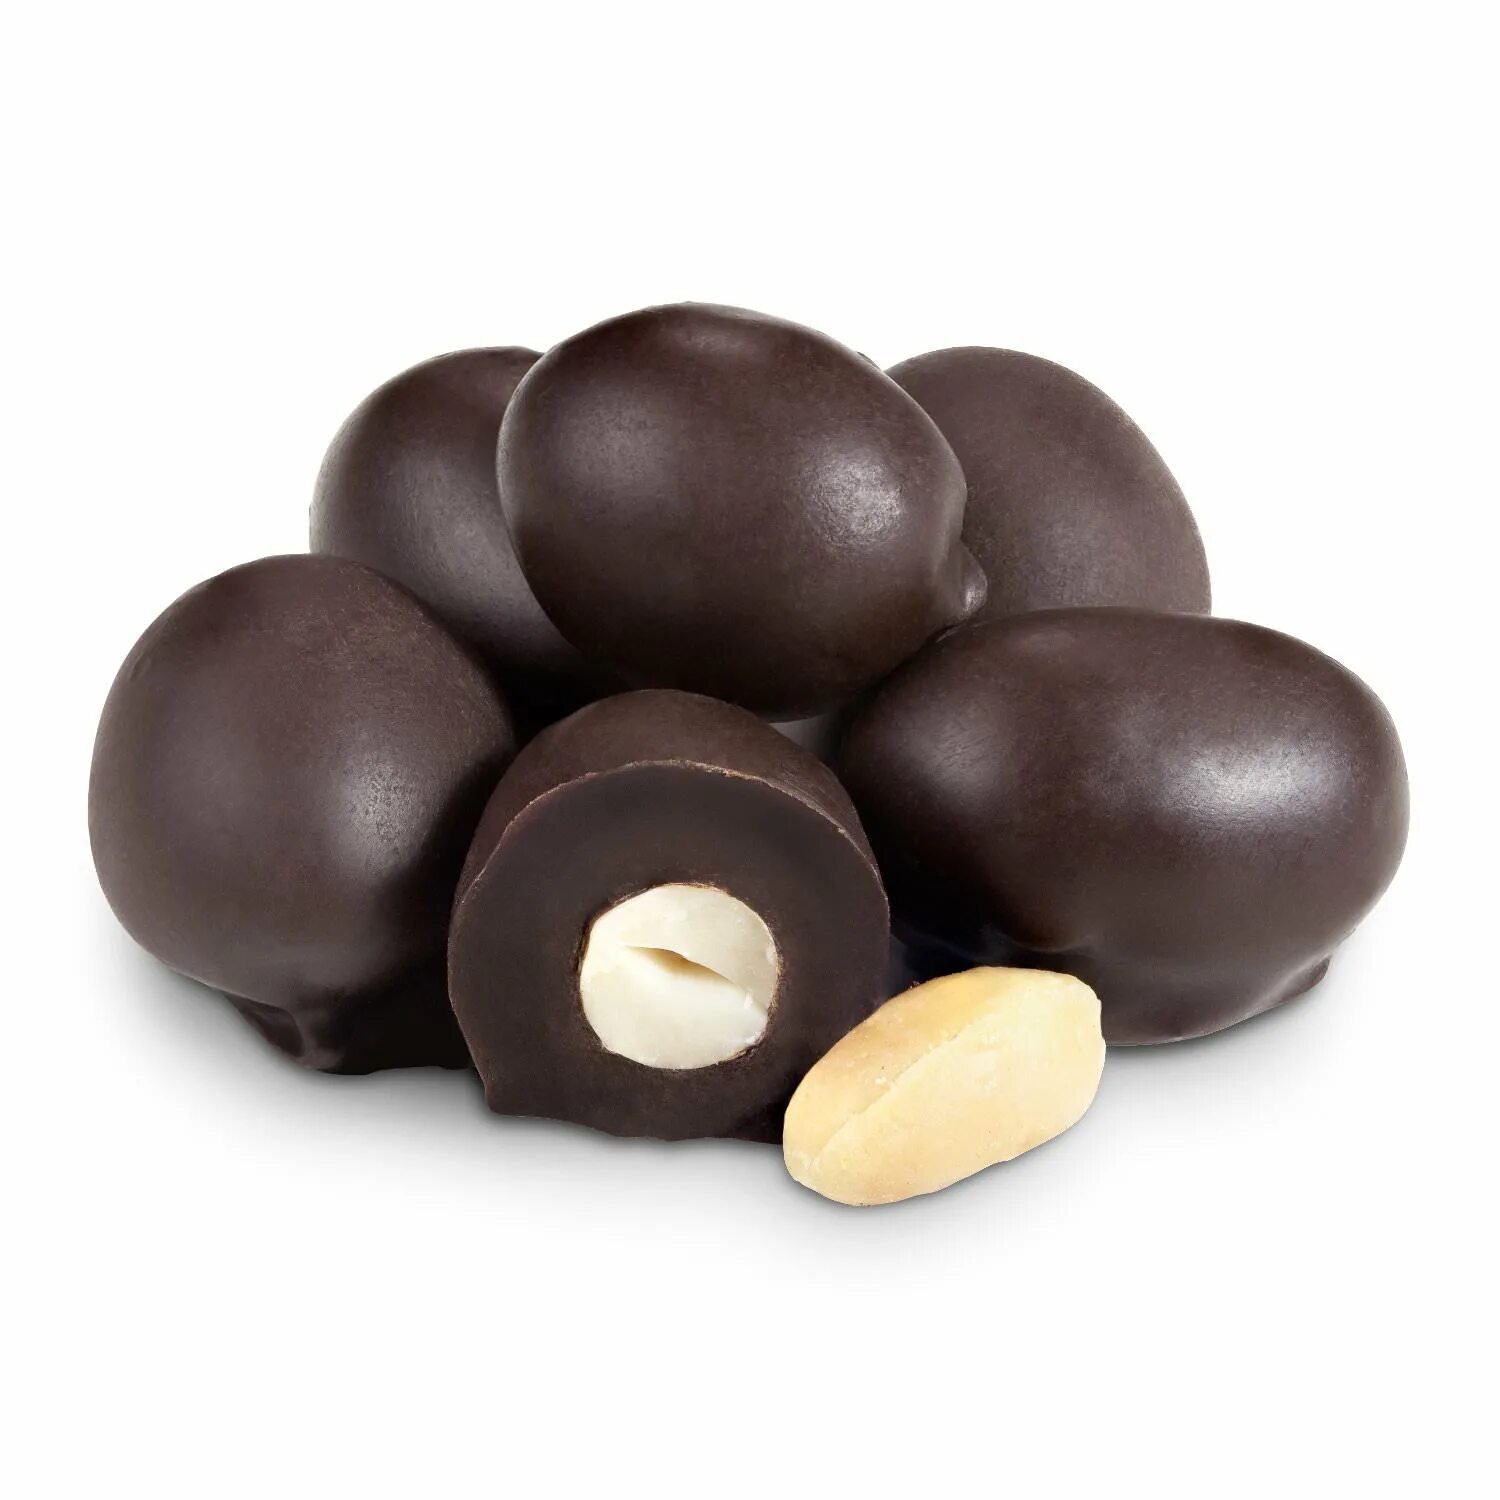 Цена шоколадной глазури. Арахис в шоколаде. Драже арахис в какао 500гр. Орехи в глазури. Драже шоколадное в глазури.